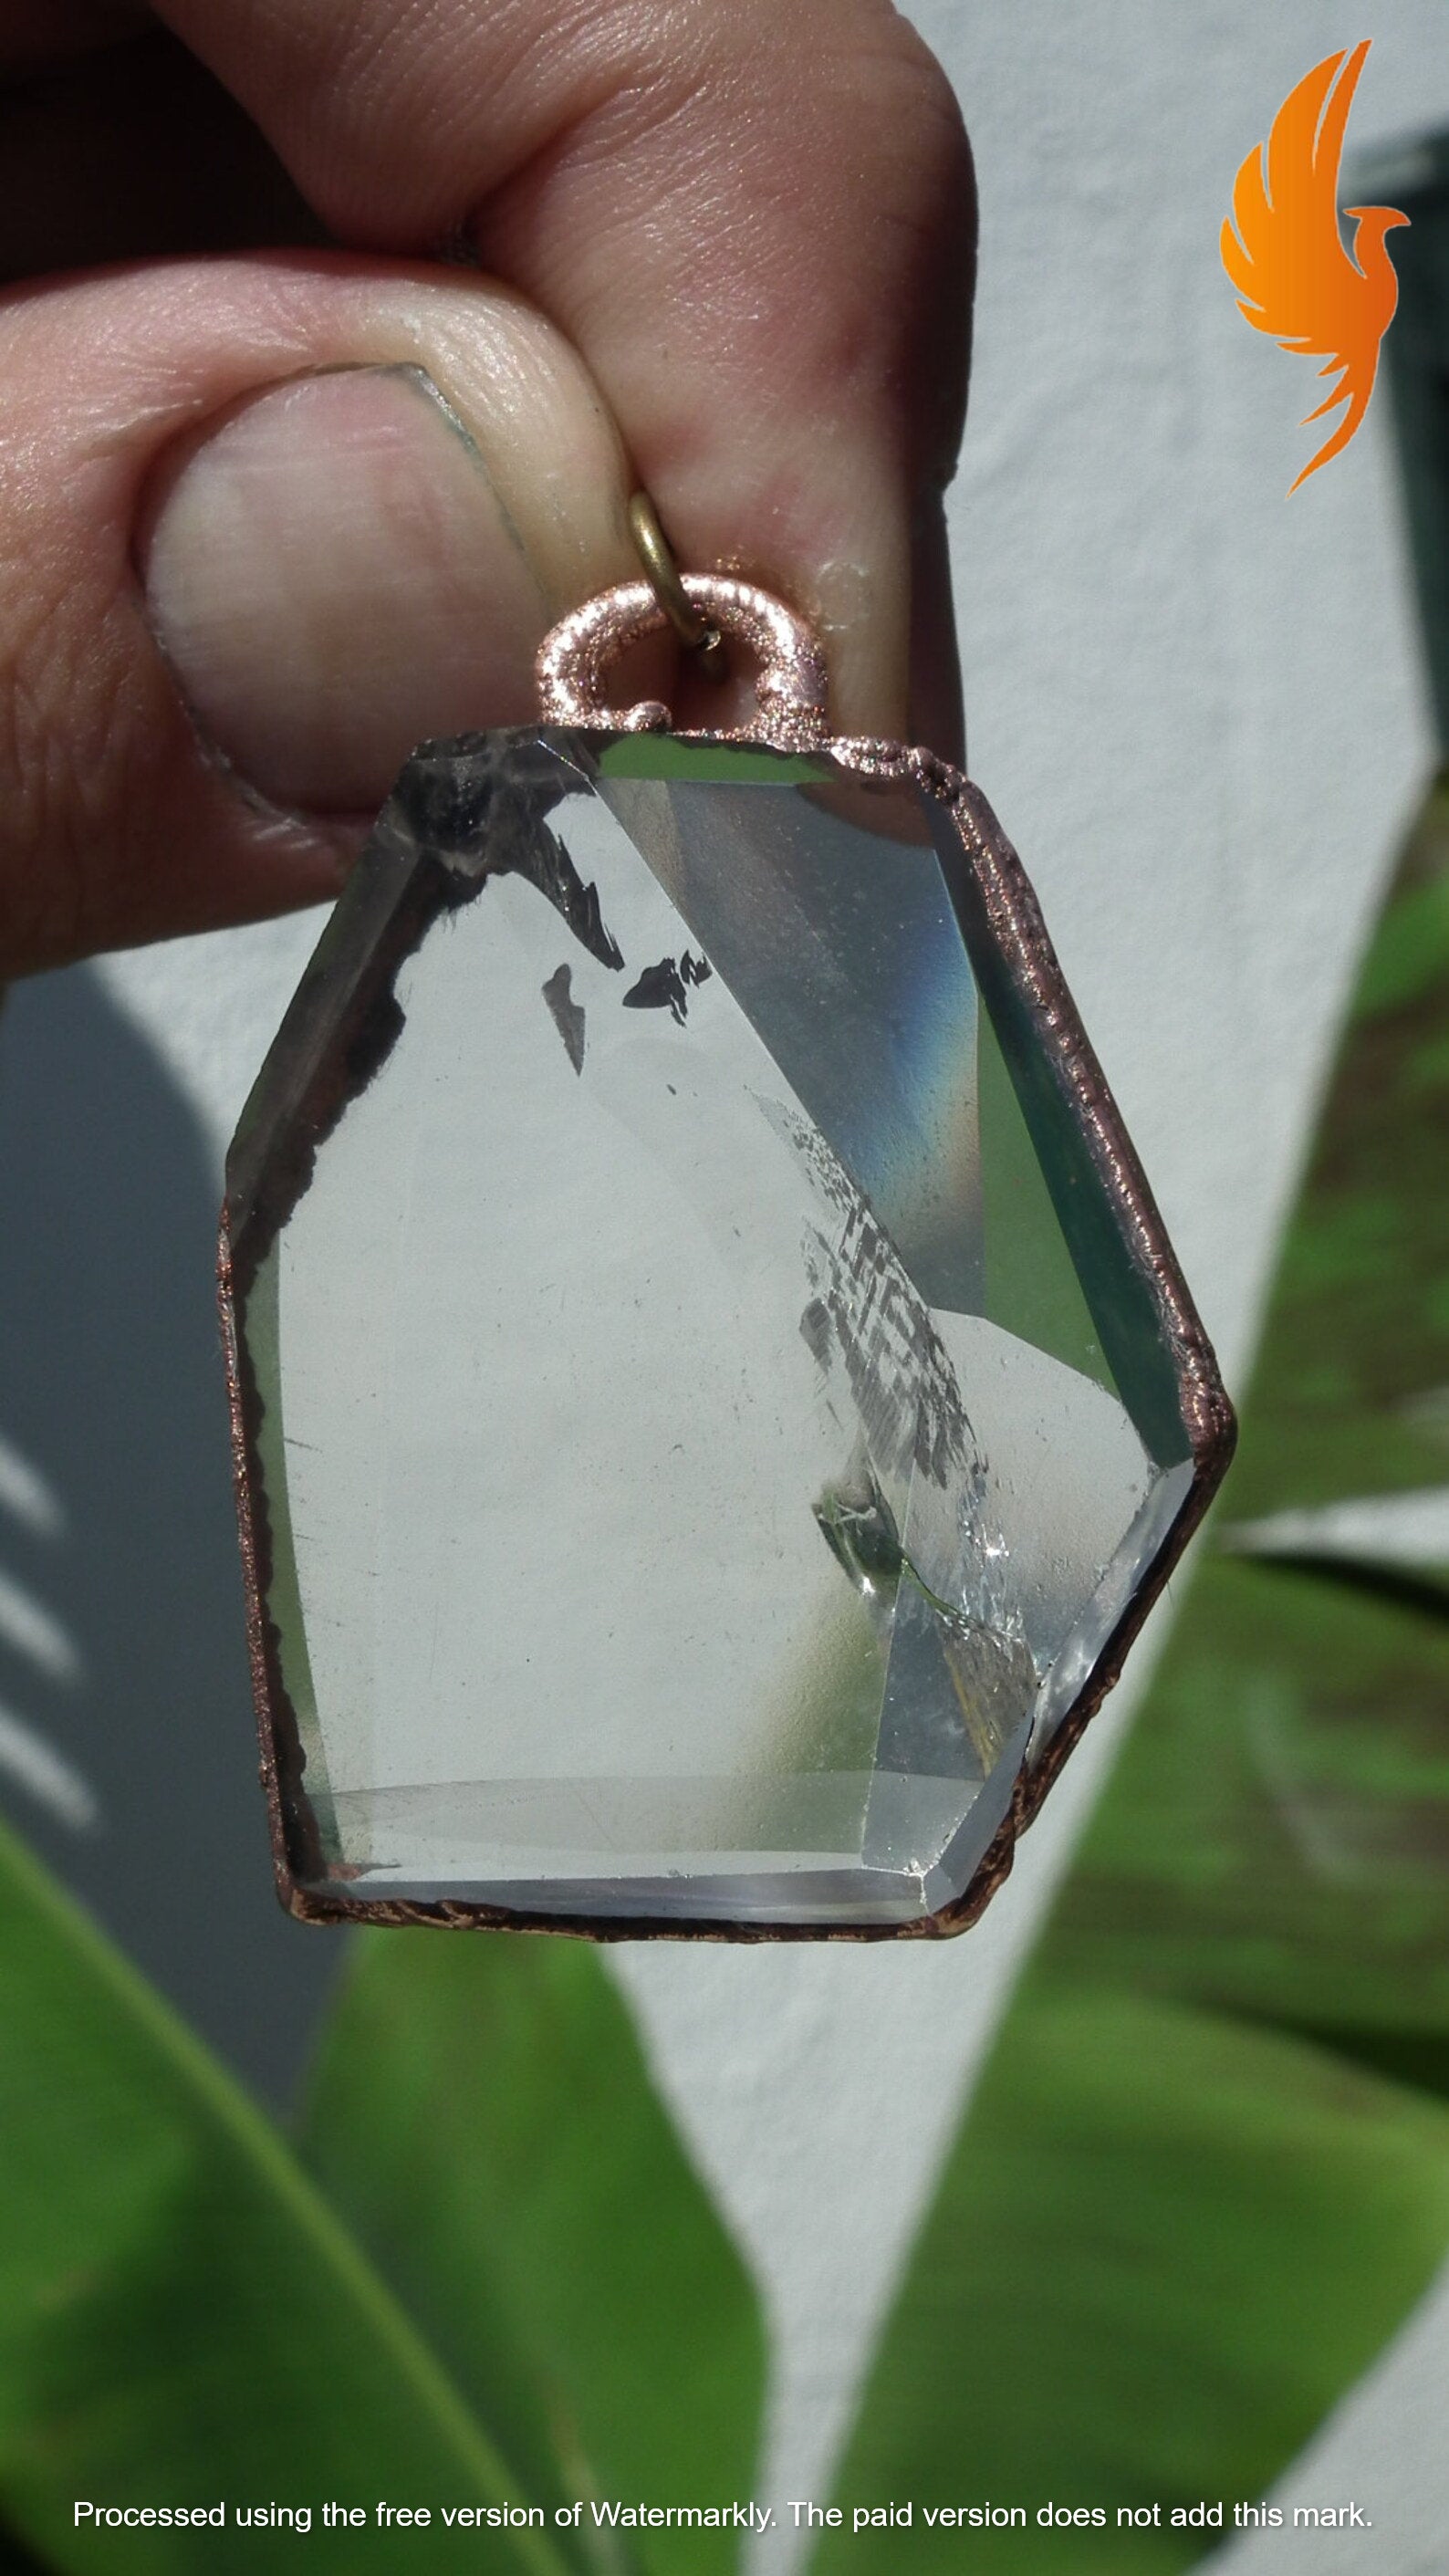 Electroformed Copper Smokey quartz Necklace